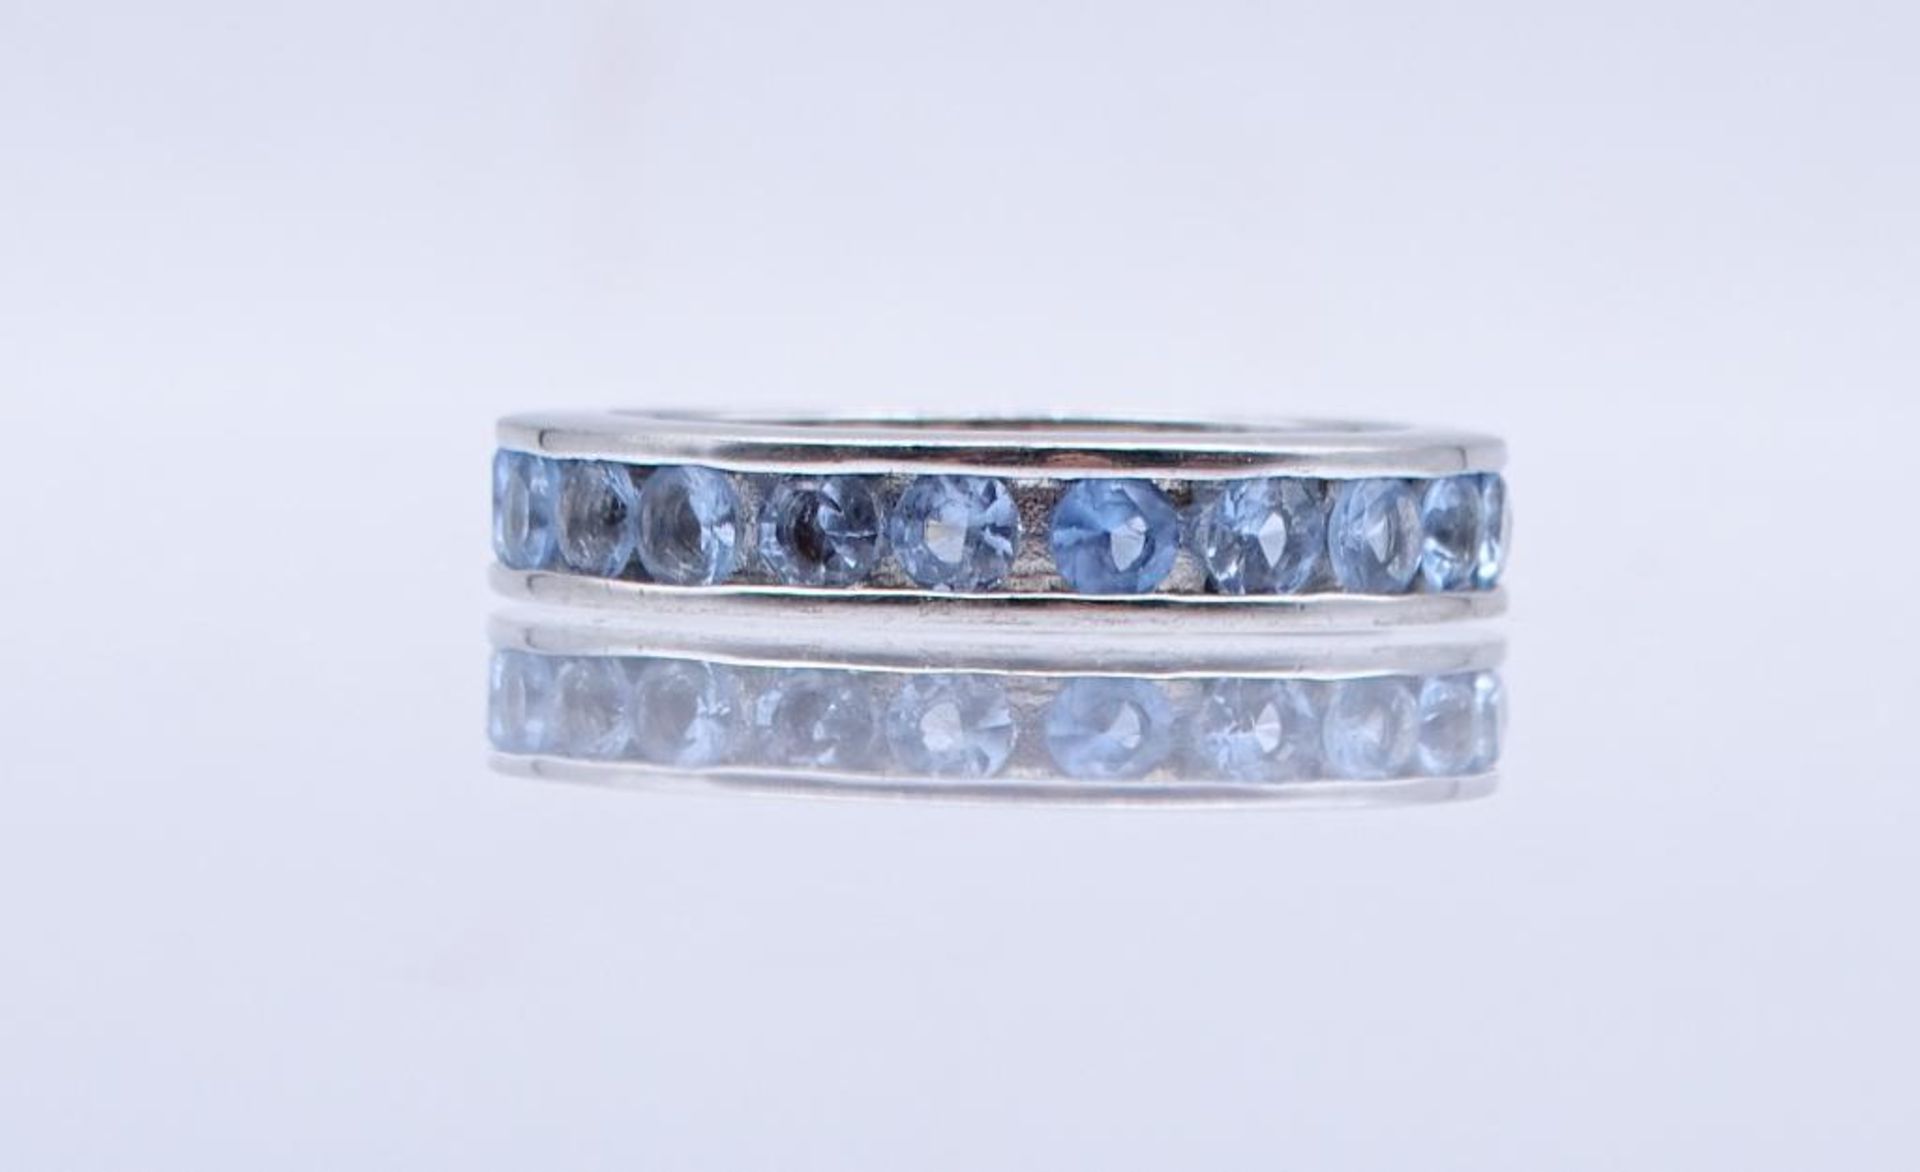 Memory-Silber-Ring, Silber 925/000, 5,0gr., RG 58- - -22.61 % buyer's premium on the hammer priceVAT - Bild 3 aus 4